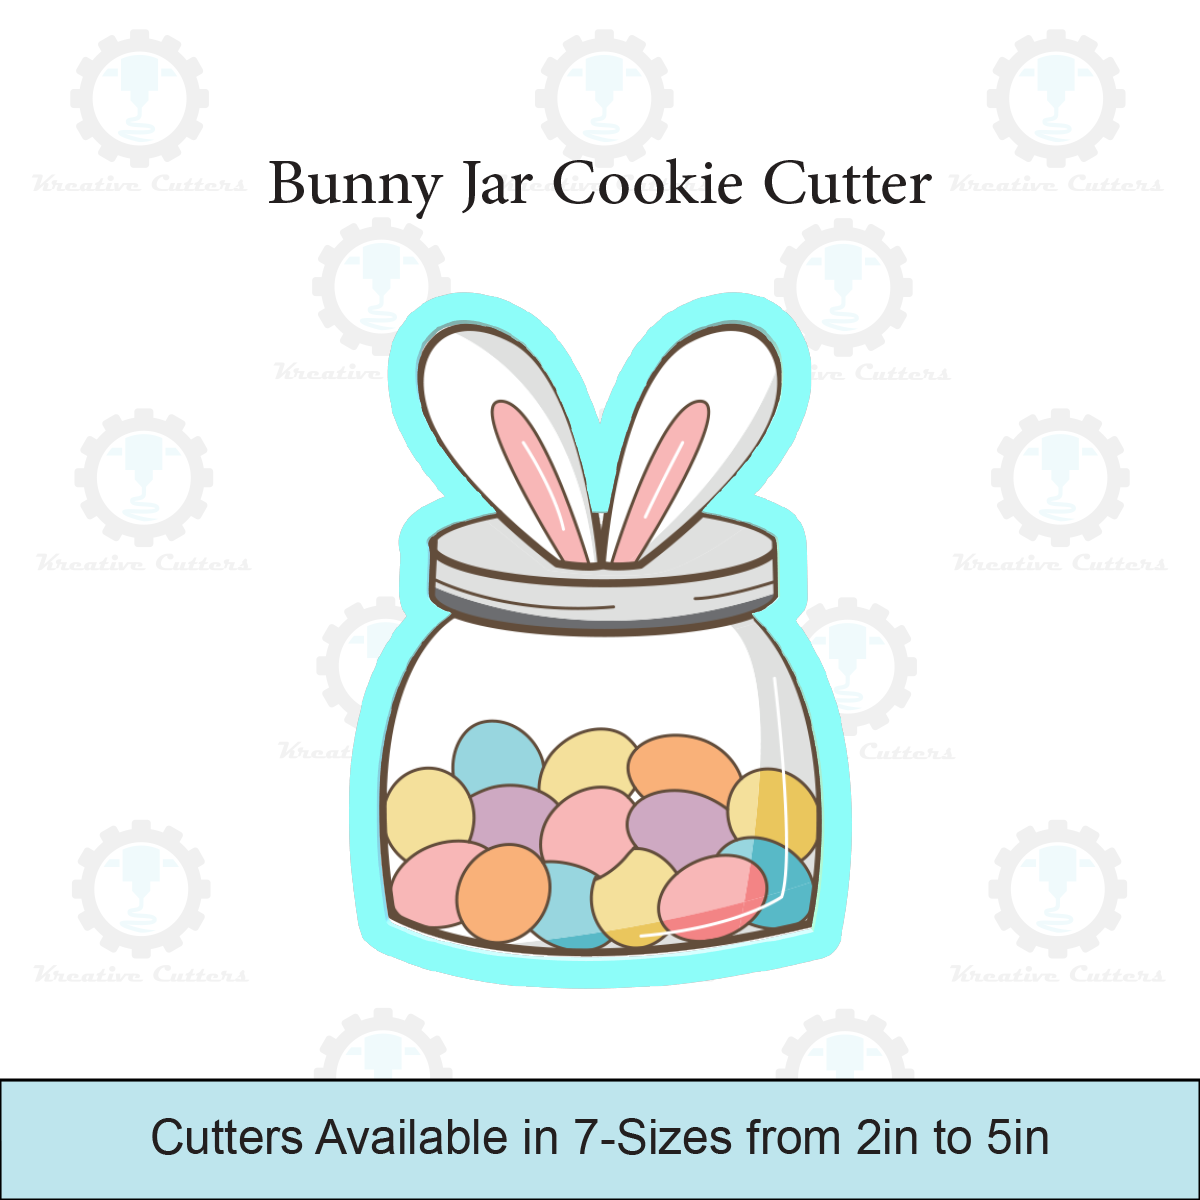 Bunny Jar Cookie Cutter